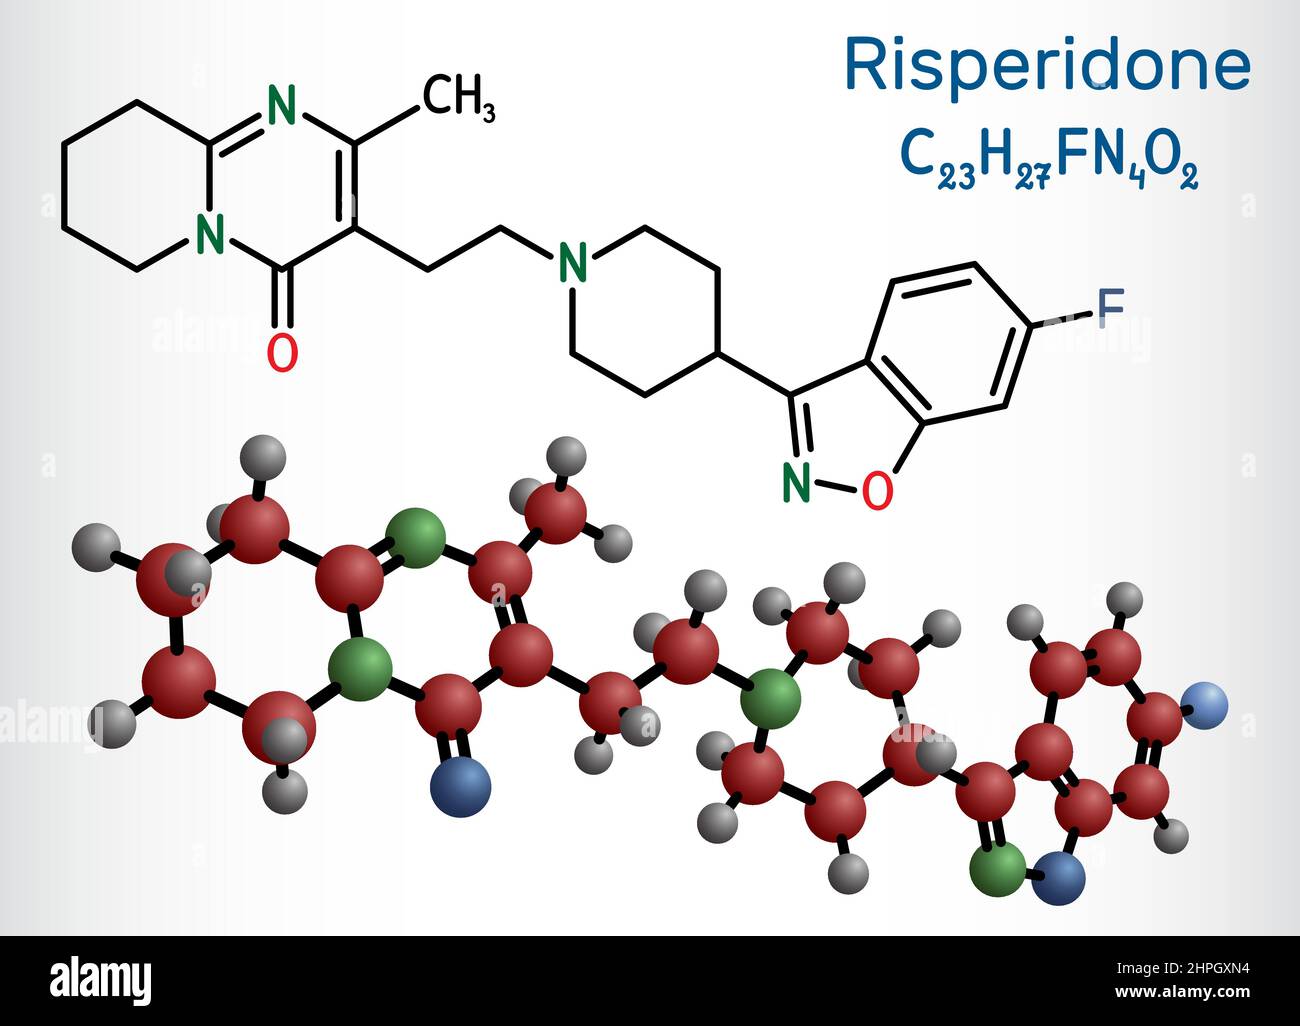 Risperidon molecule. It is antipsychotic medication, used to treat of schizophrenia, bipolar mania, psychosis, depression. Structural chemical formula Stock Vector